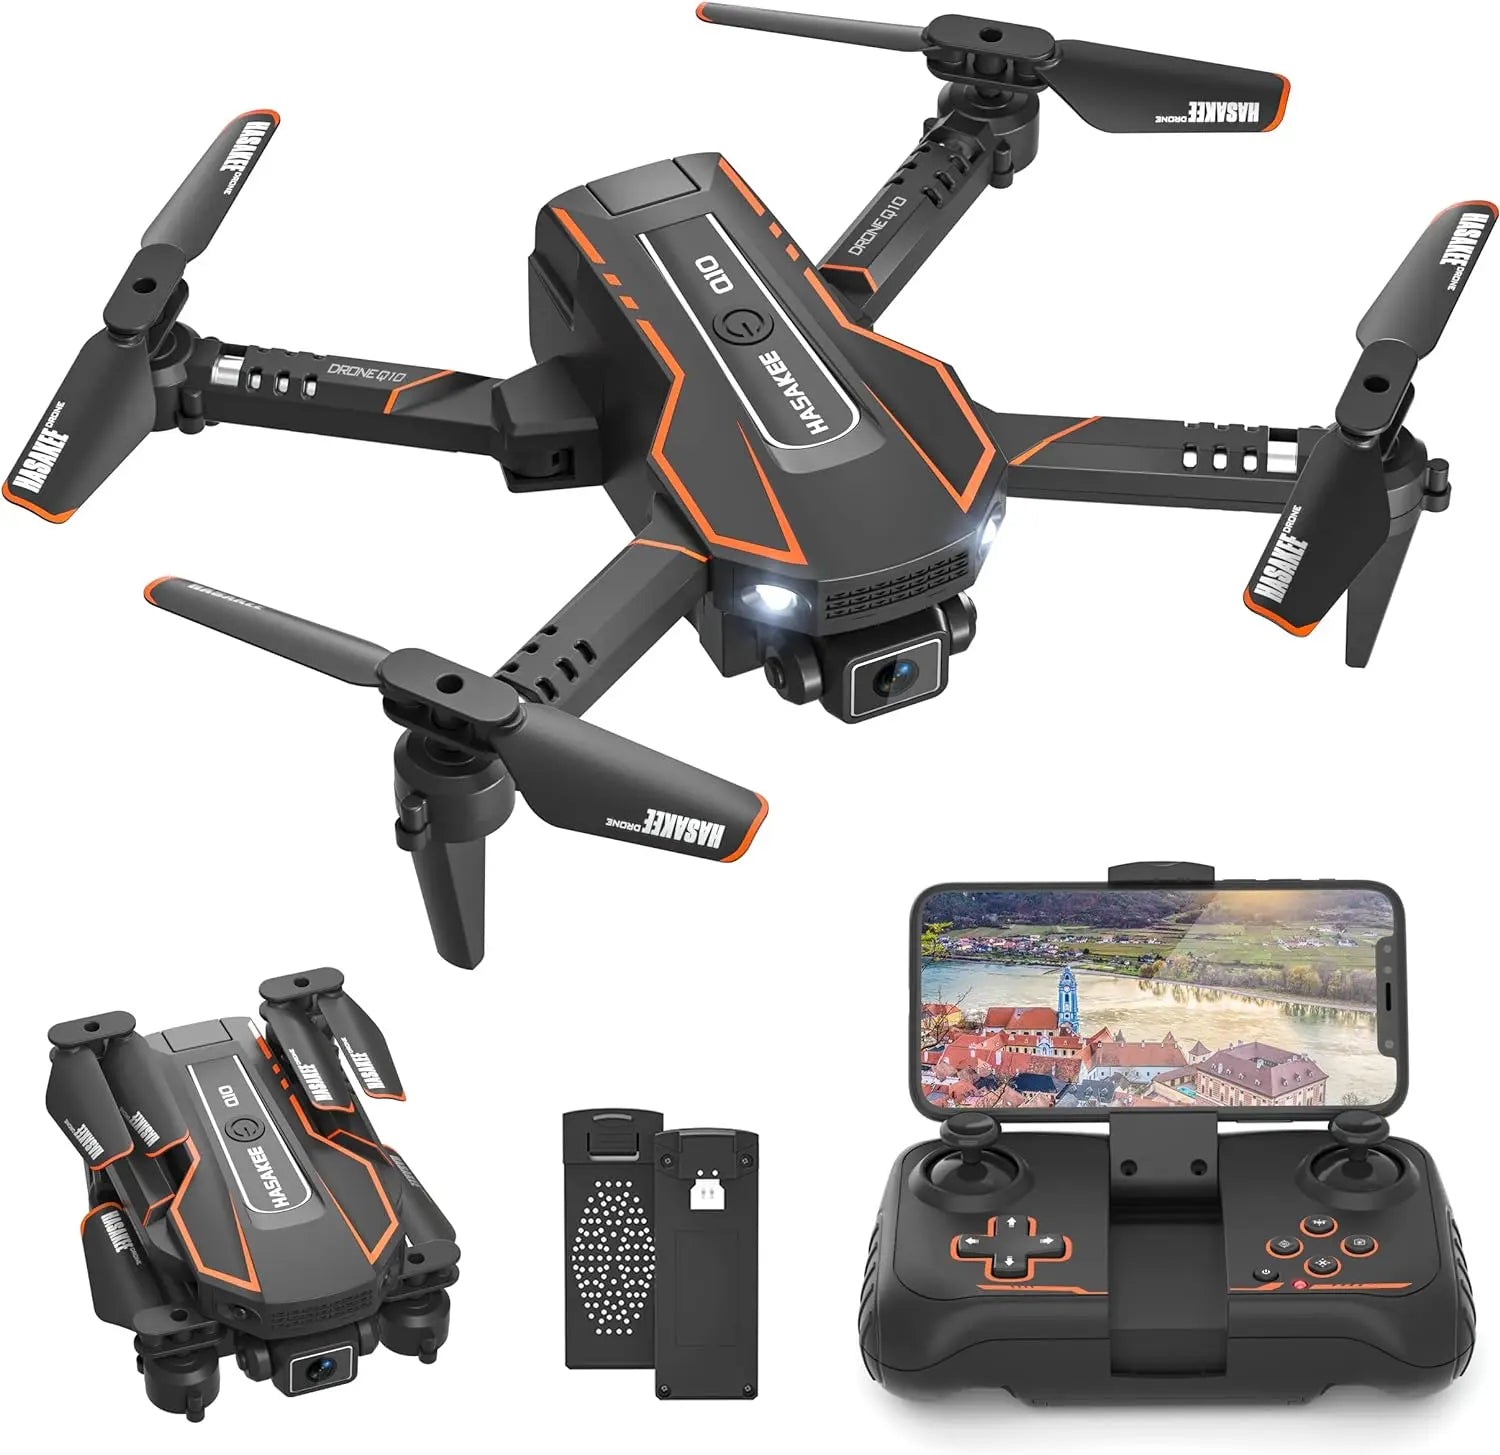 Drone sans camera avec telecommande - Cdiscount